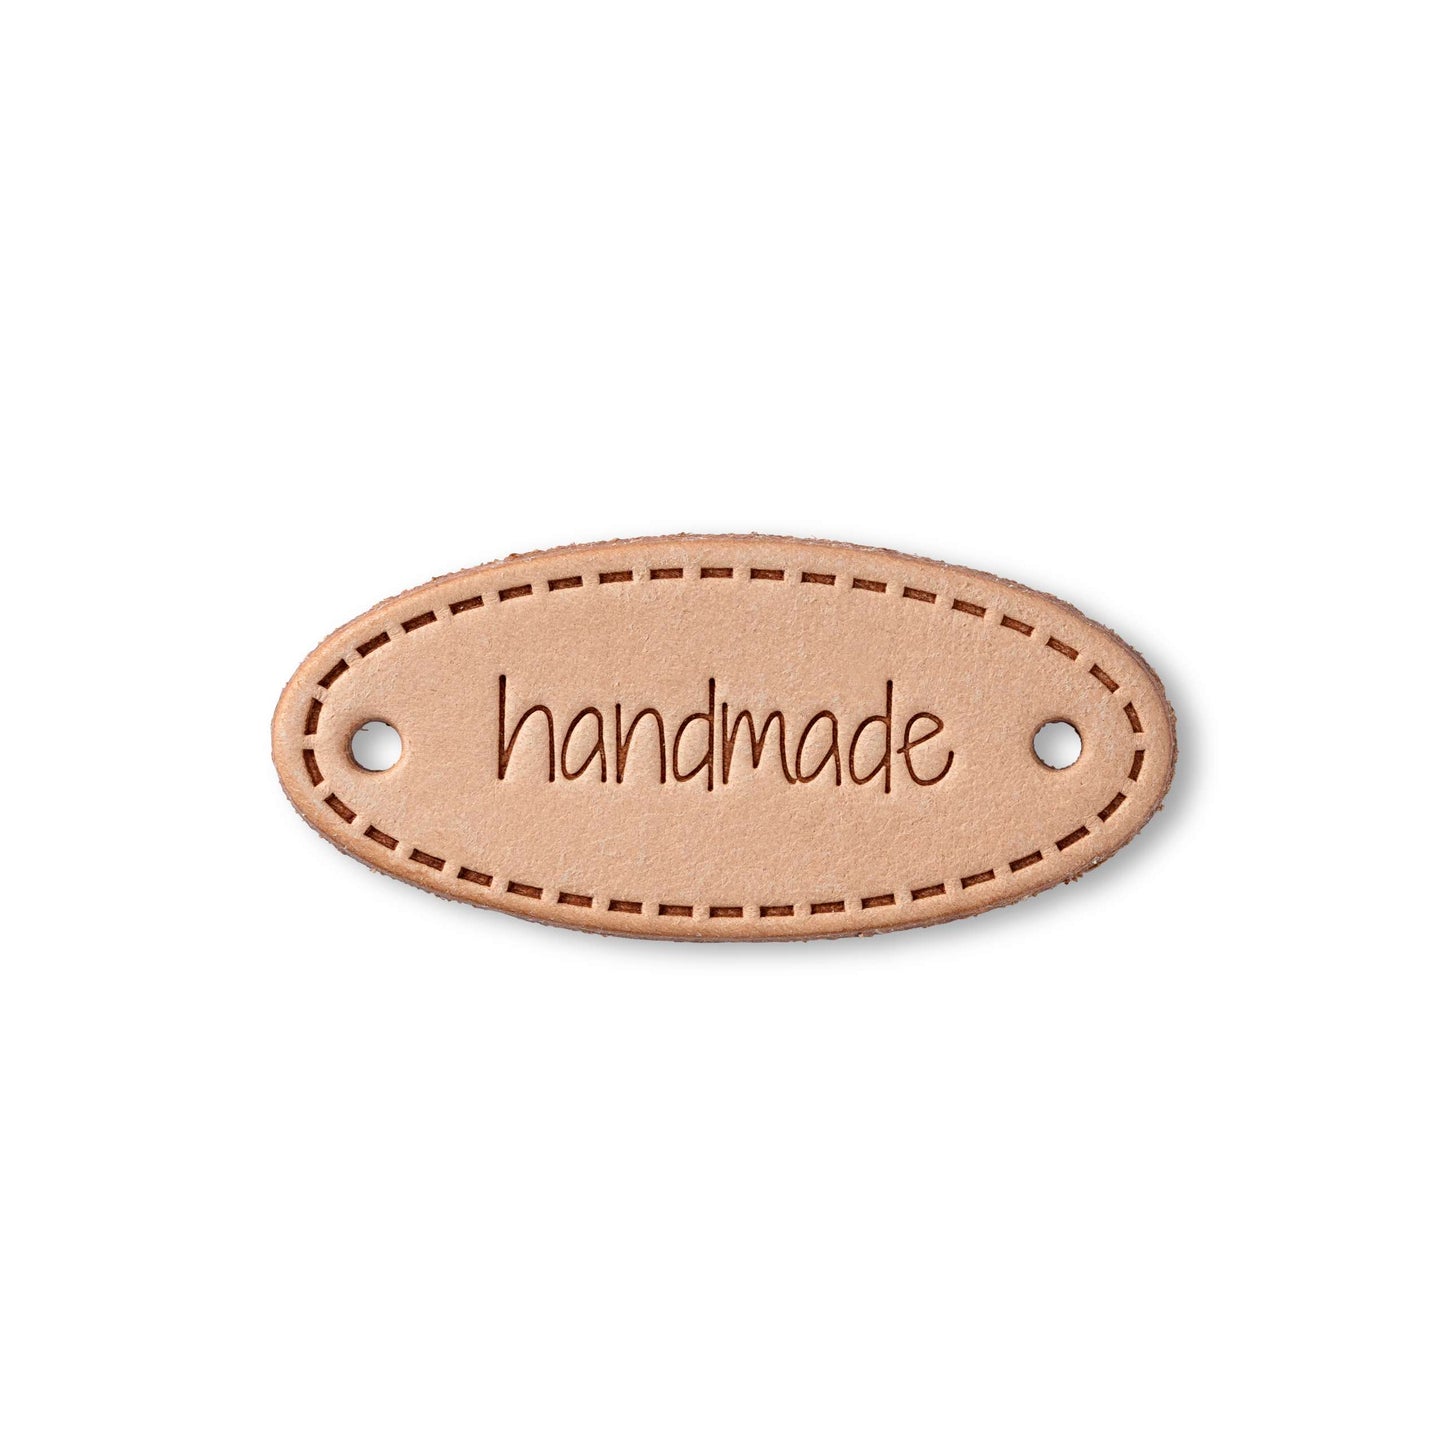 Prym Label Handmade oval